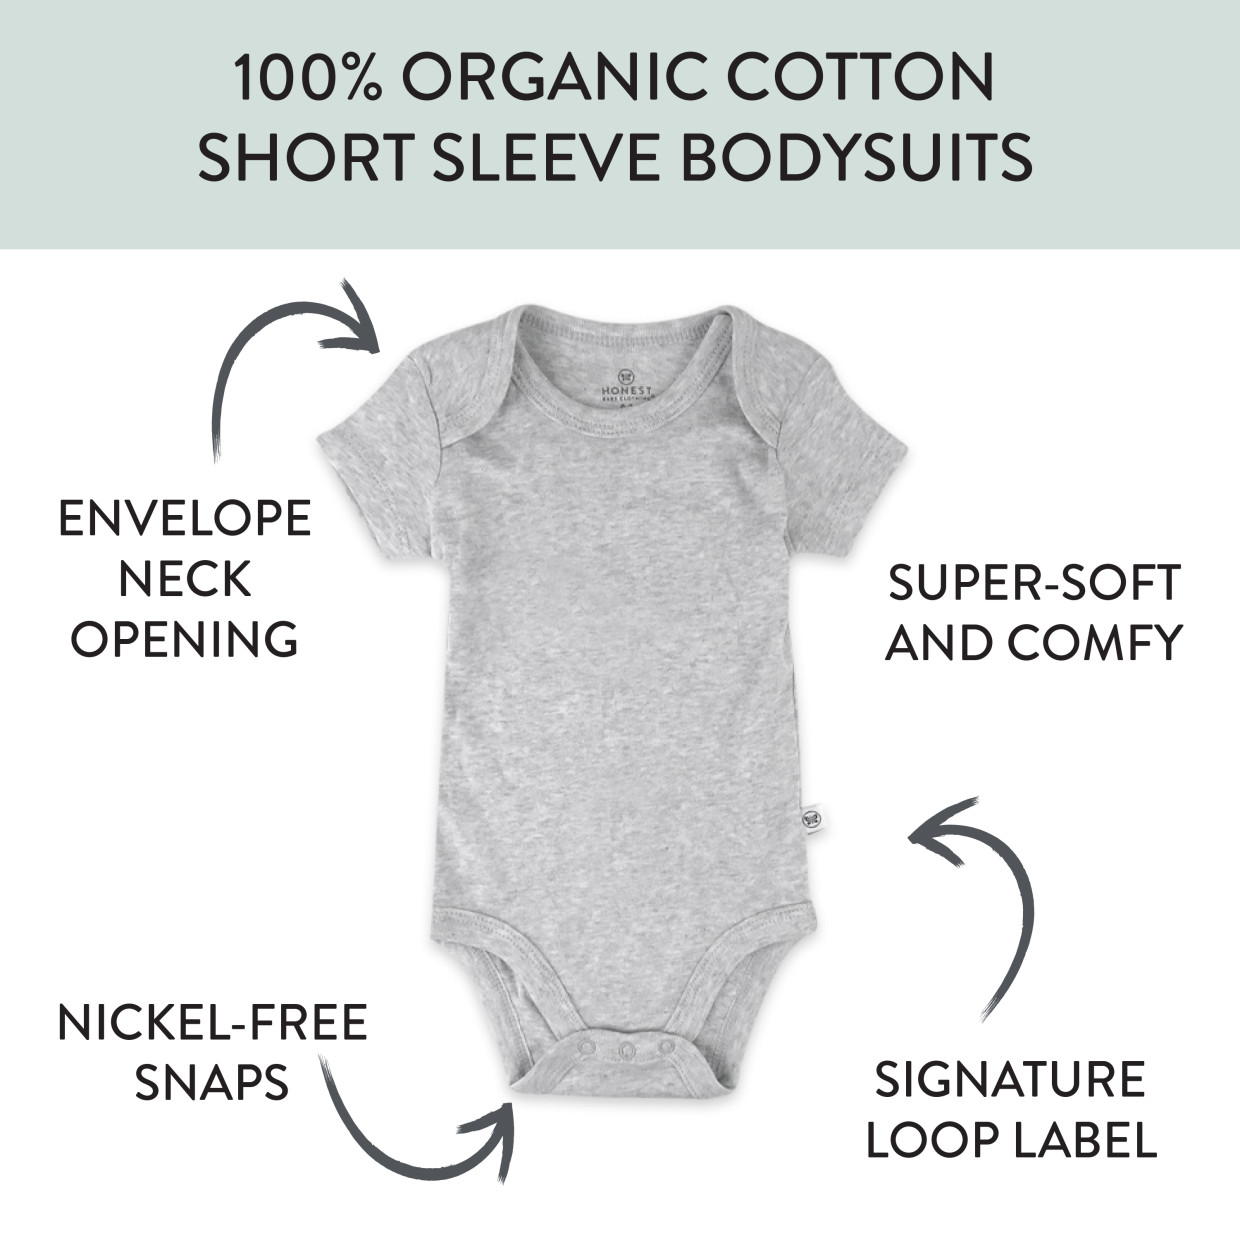 Honest Baby Clothing 5-Pack Organic Cotton Short Sleeve Bodysuit - Twinkle Star Pink, 3-6 M, 5.